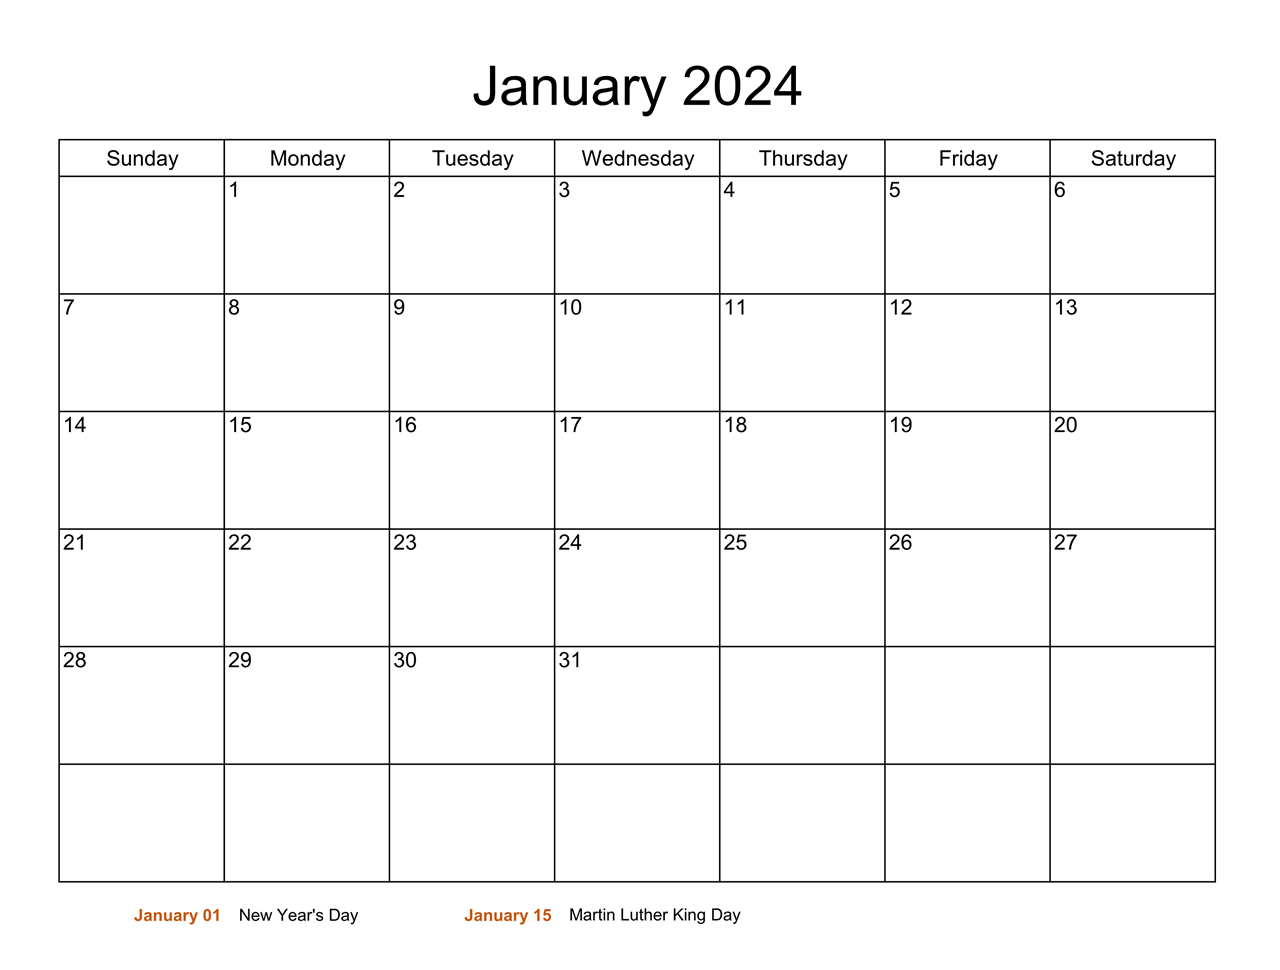 Calendar for January 2024